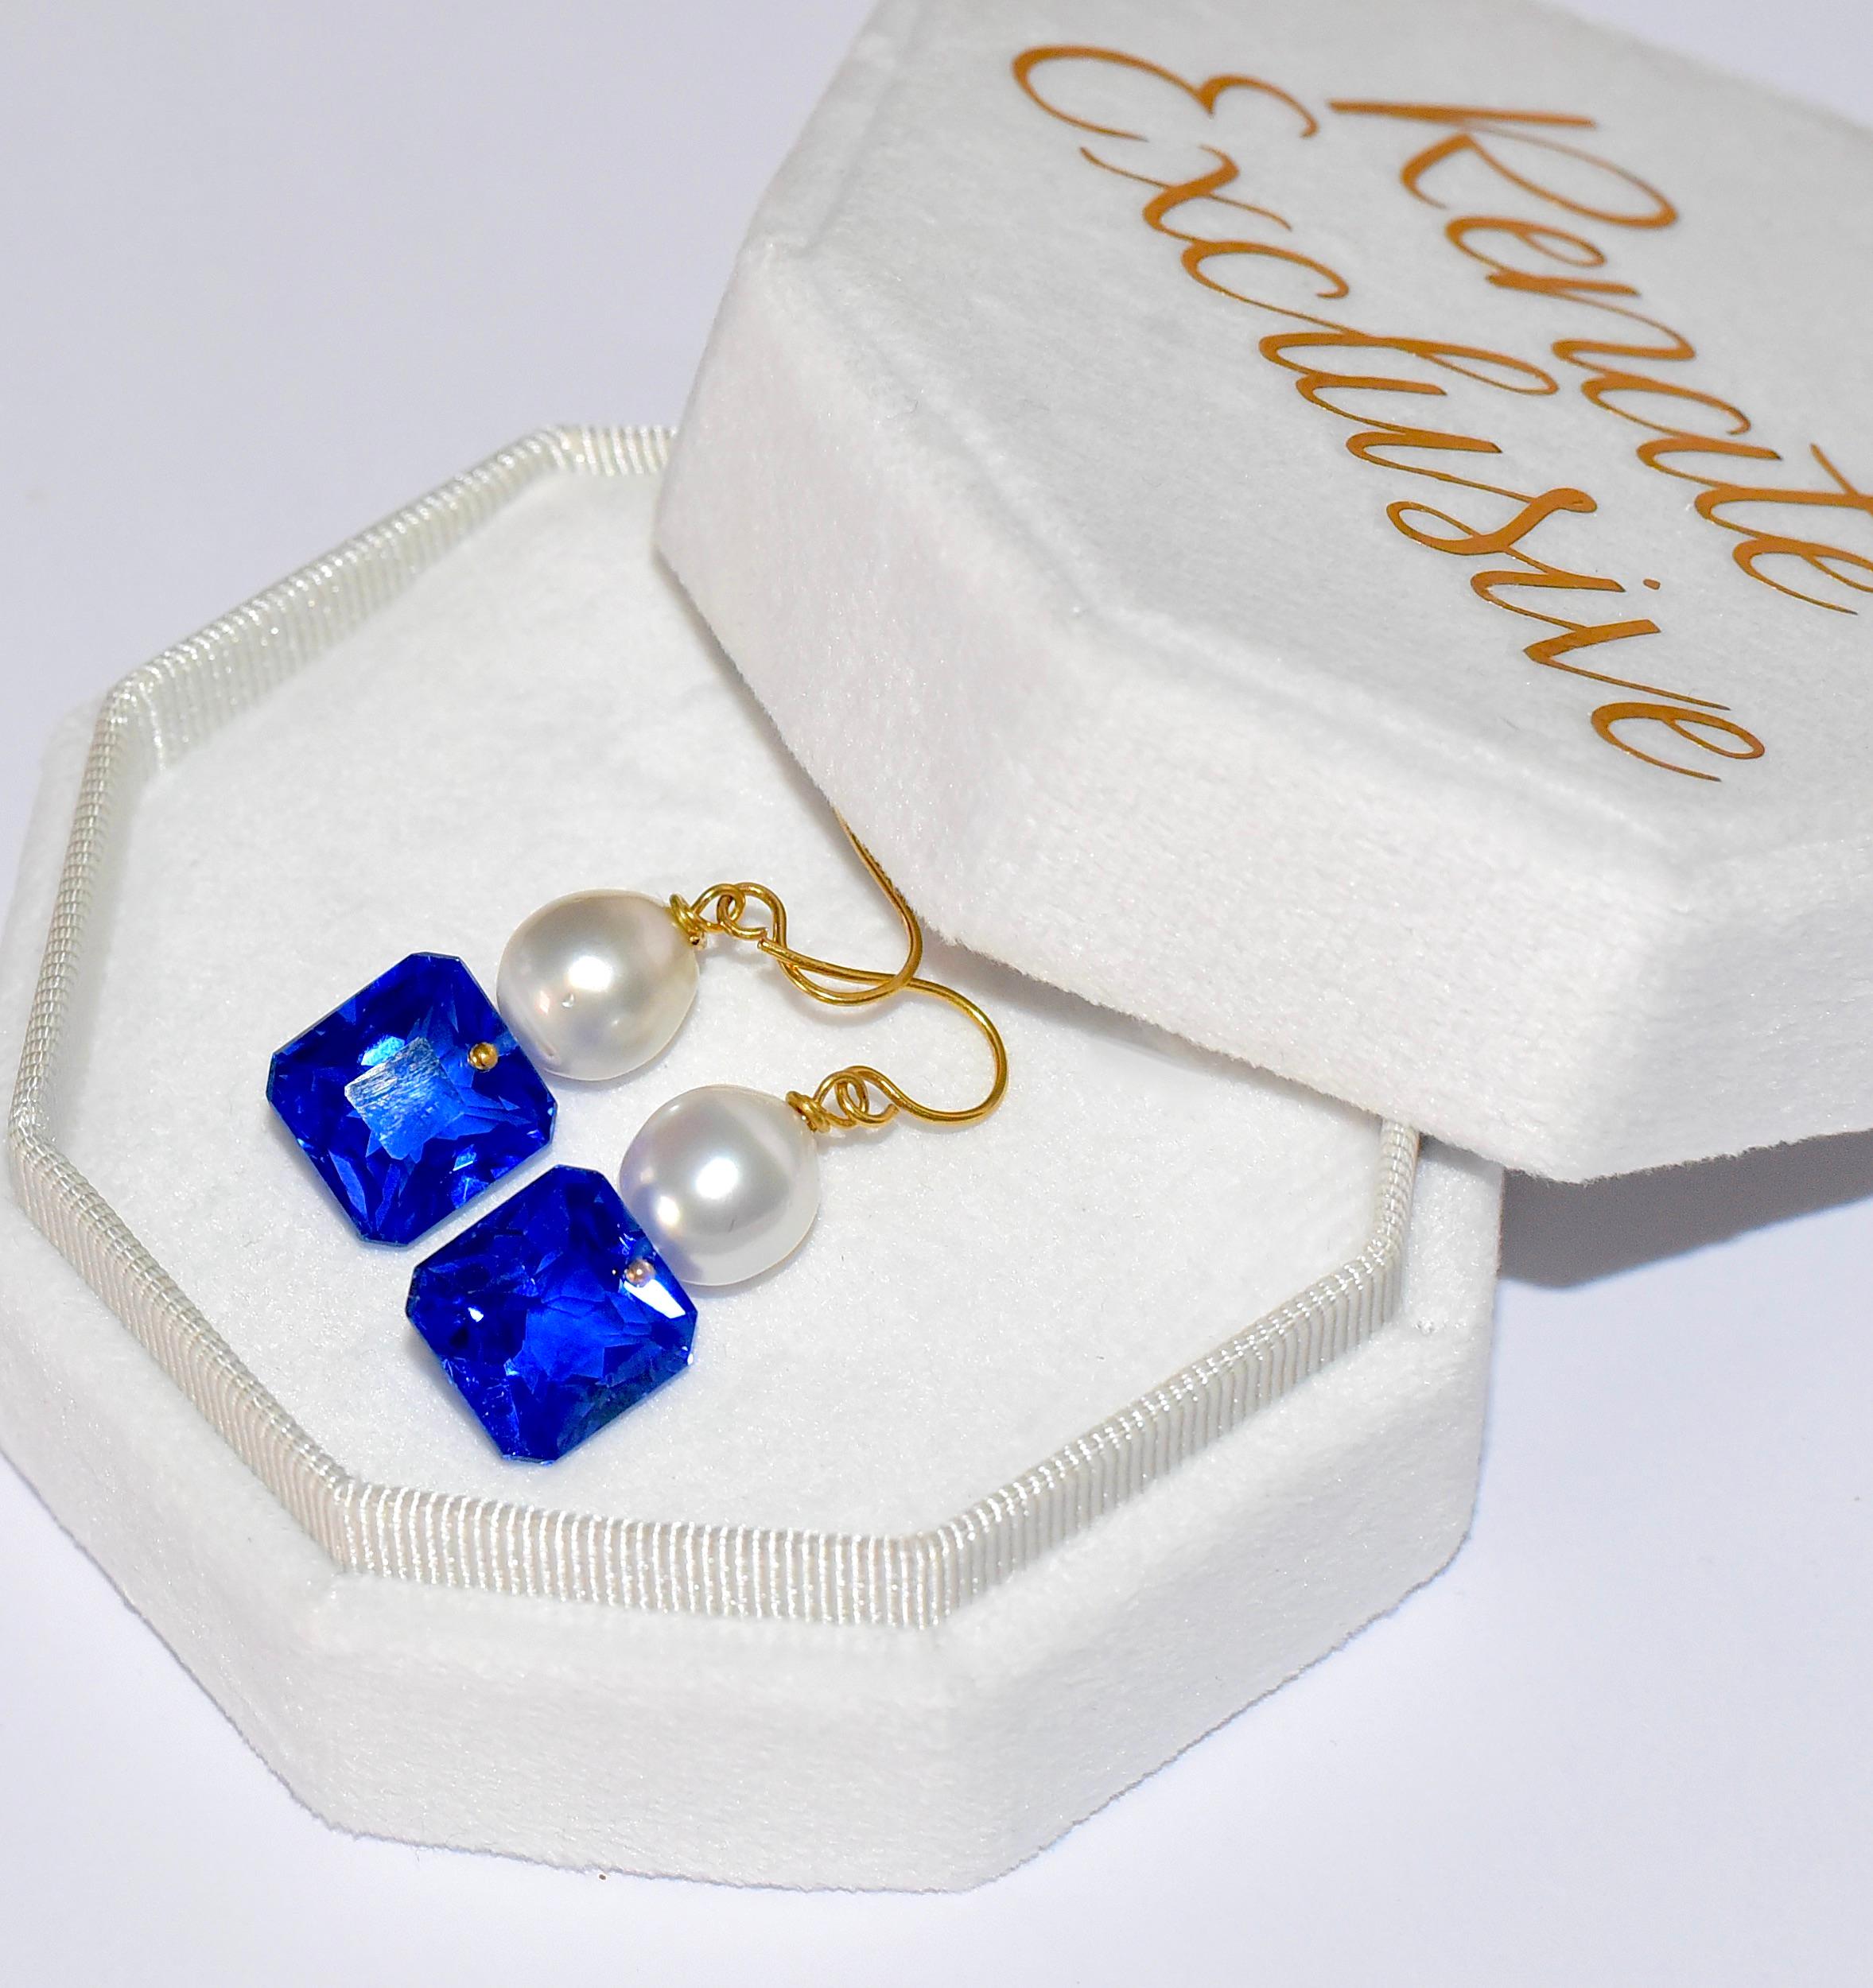 Baguette Cut South Sea Pearl, Blue Sapphire Earrings in 14K Solid Yellow Gold